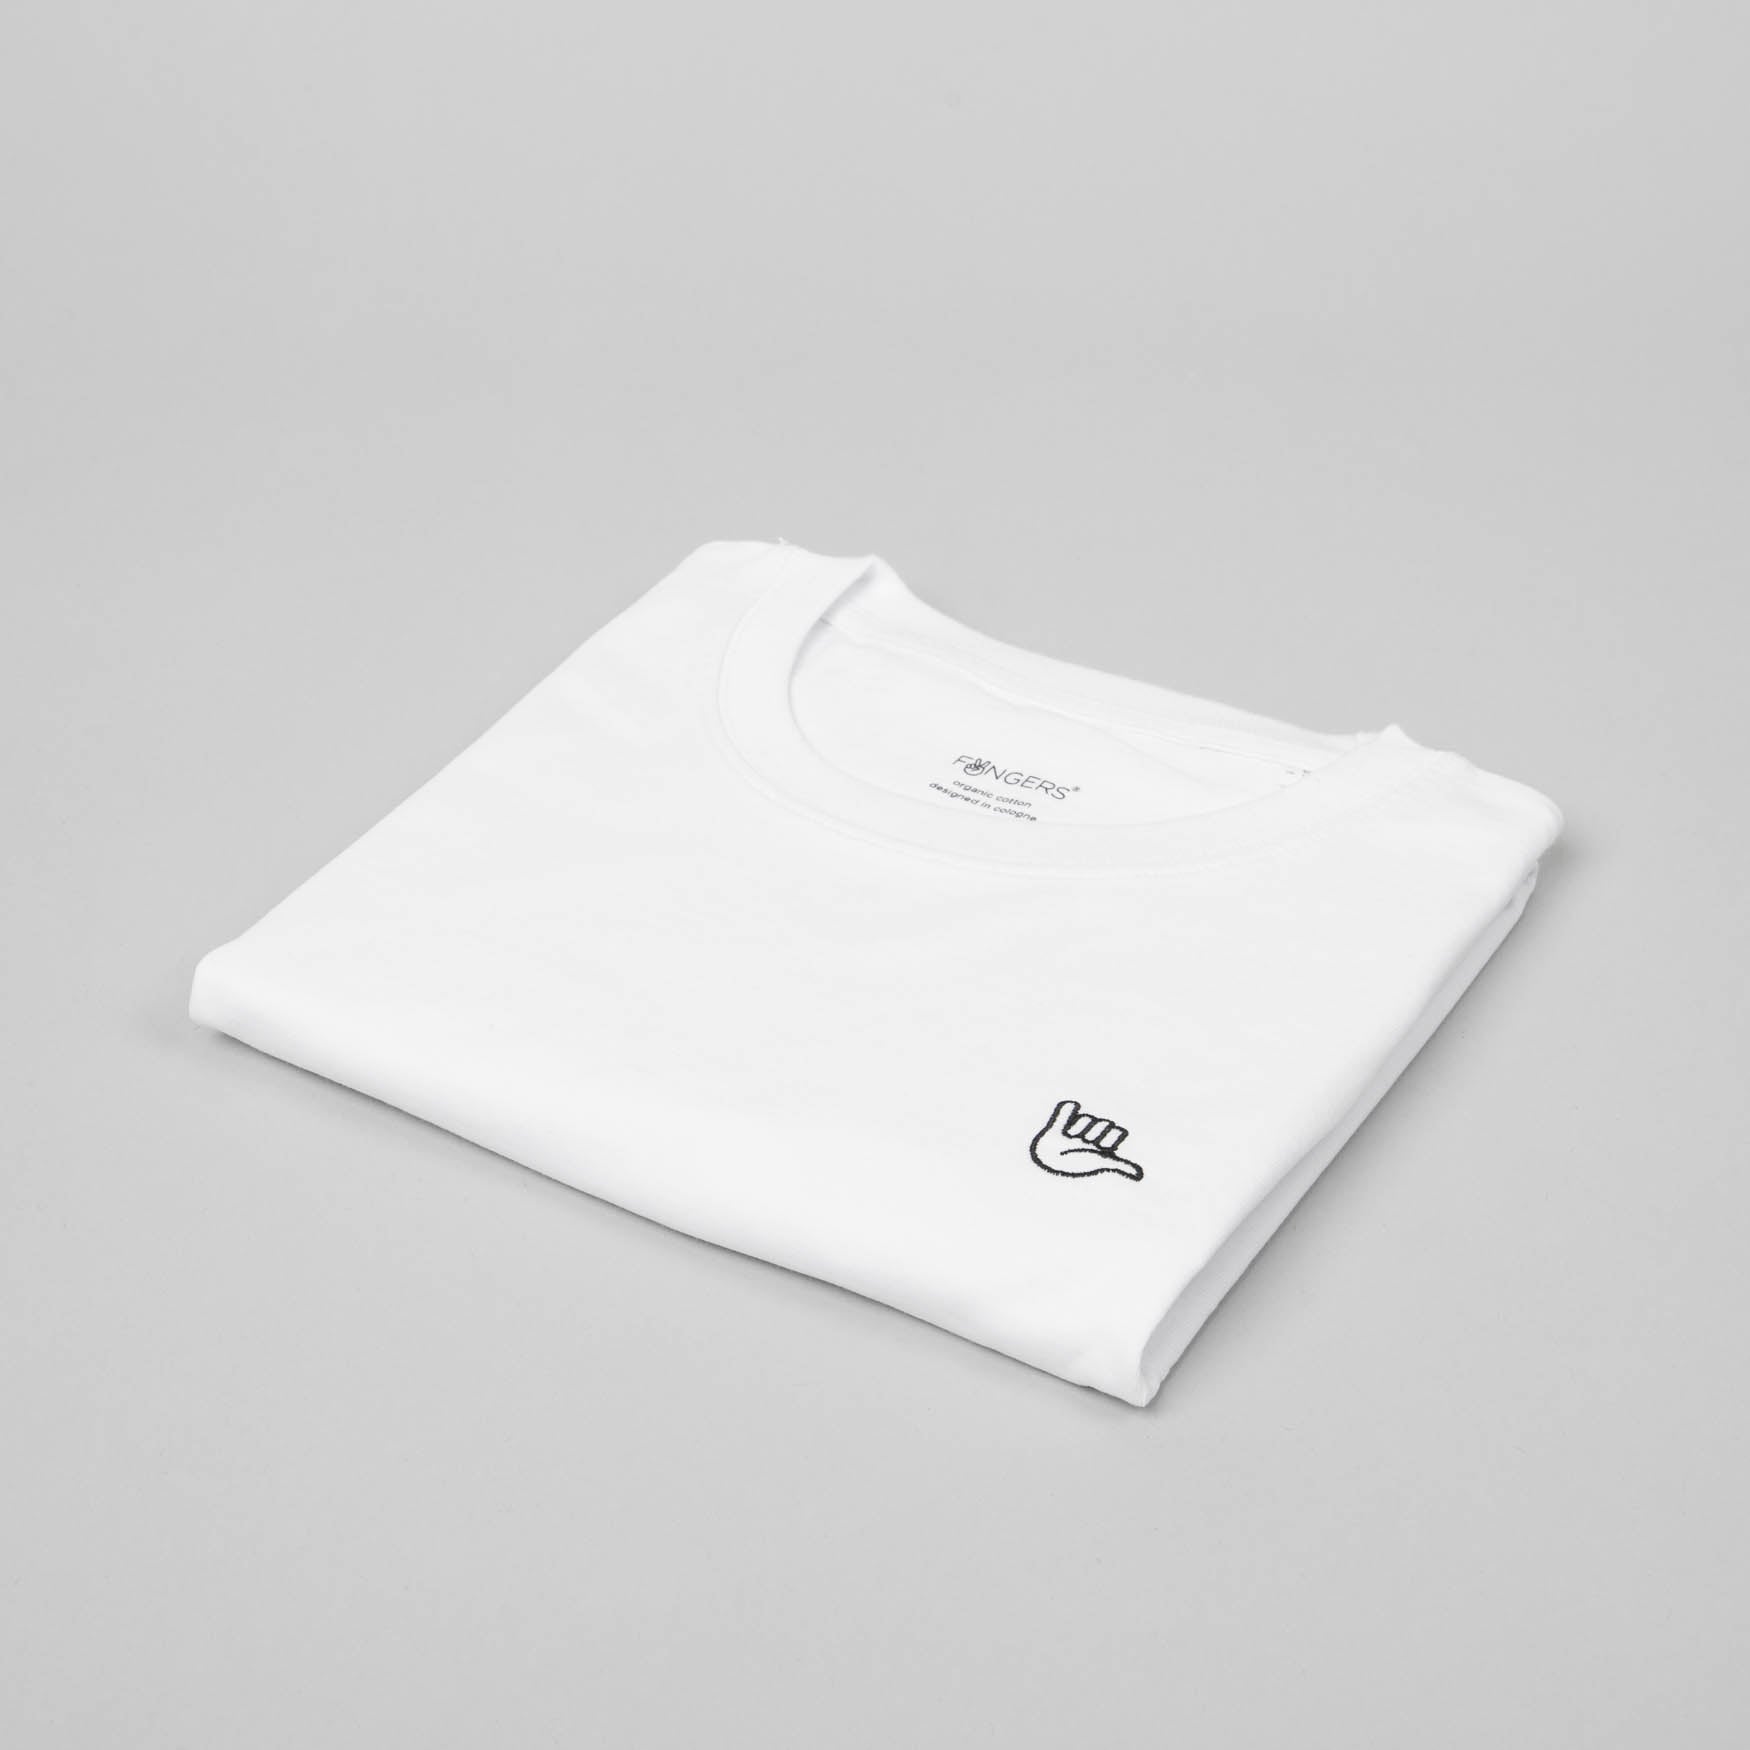 Hang Loose – T-Shirt weiß